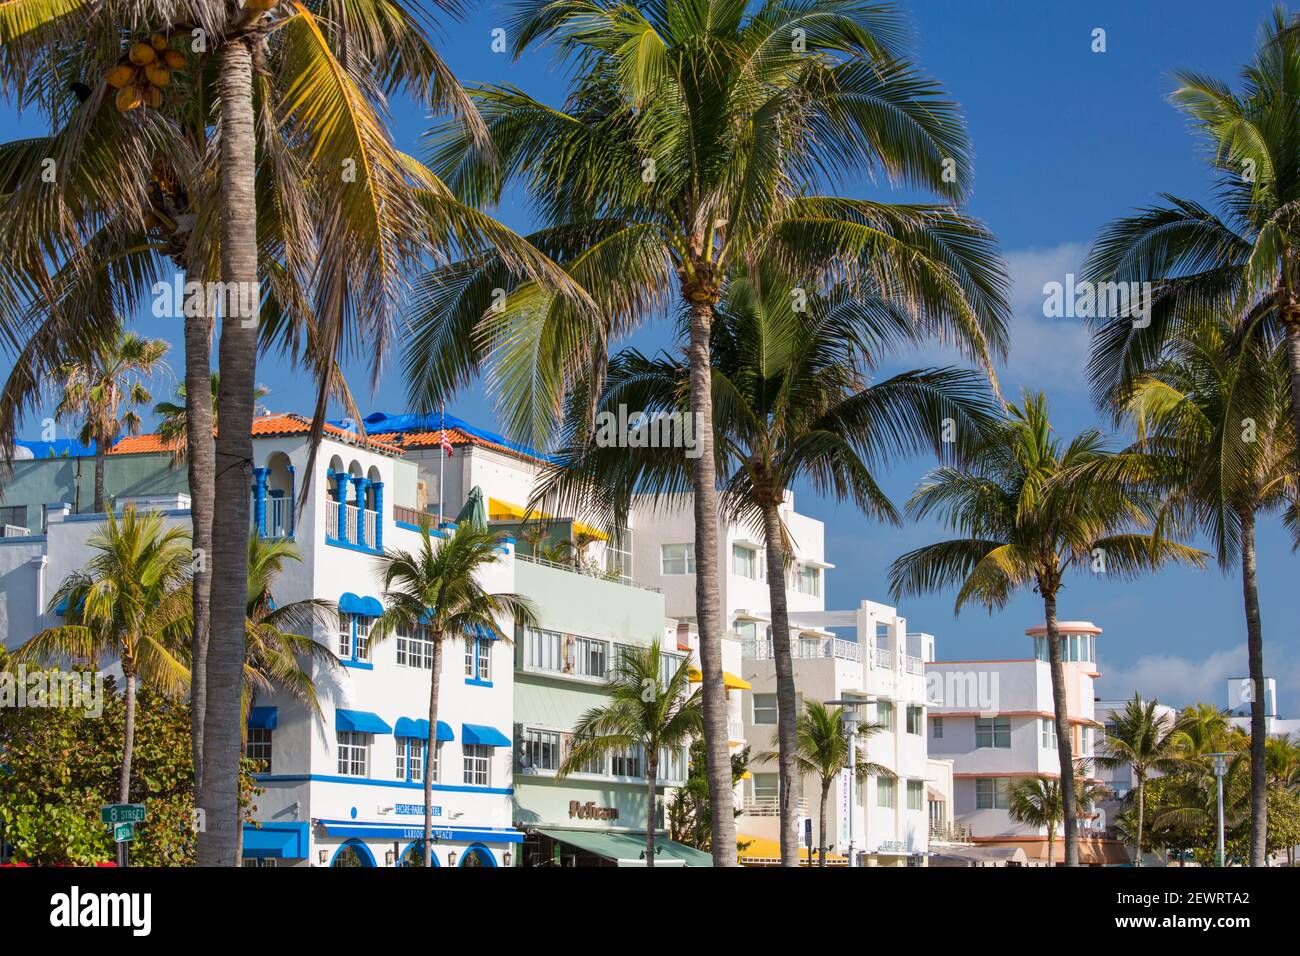 Coloridas fachadas de hotel y altas palmeras, Ocean Drive, Art Deco Historic District, South Beach, Miami Beach, Florida, Estados Unidos de América Foto de stock